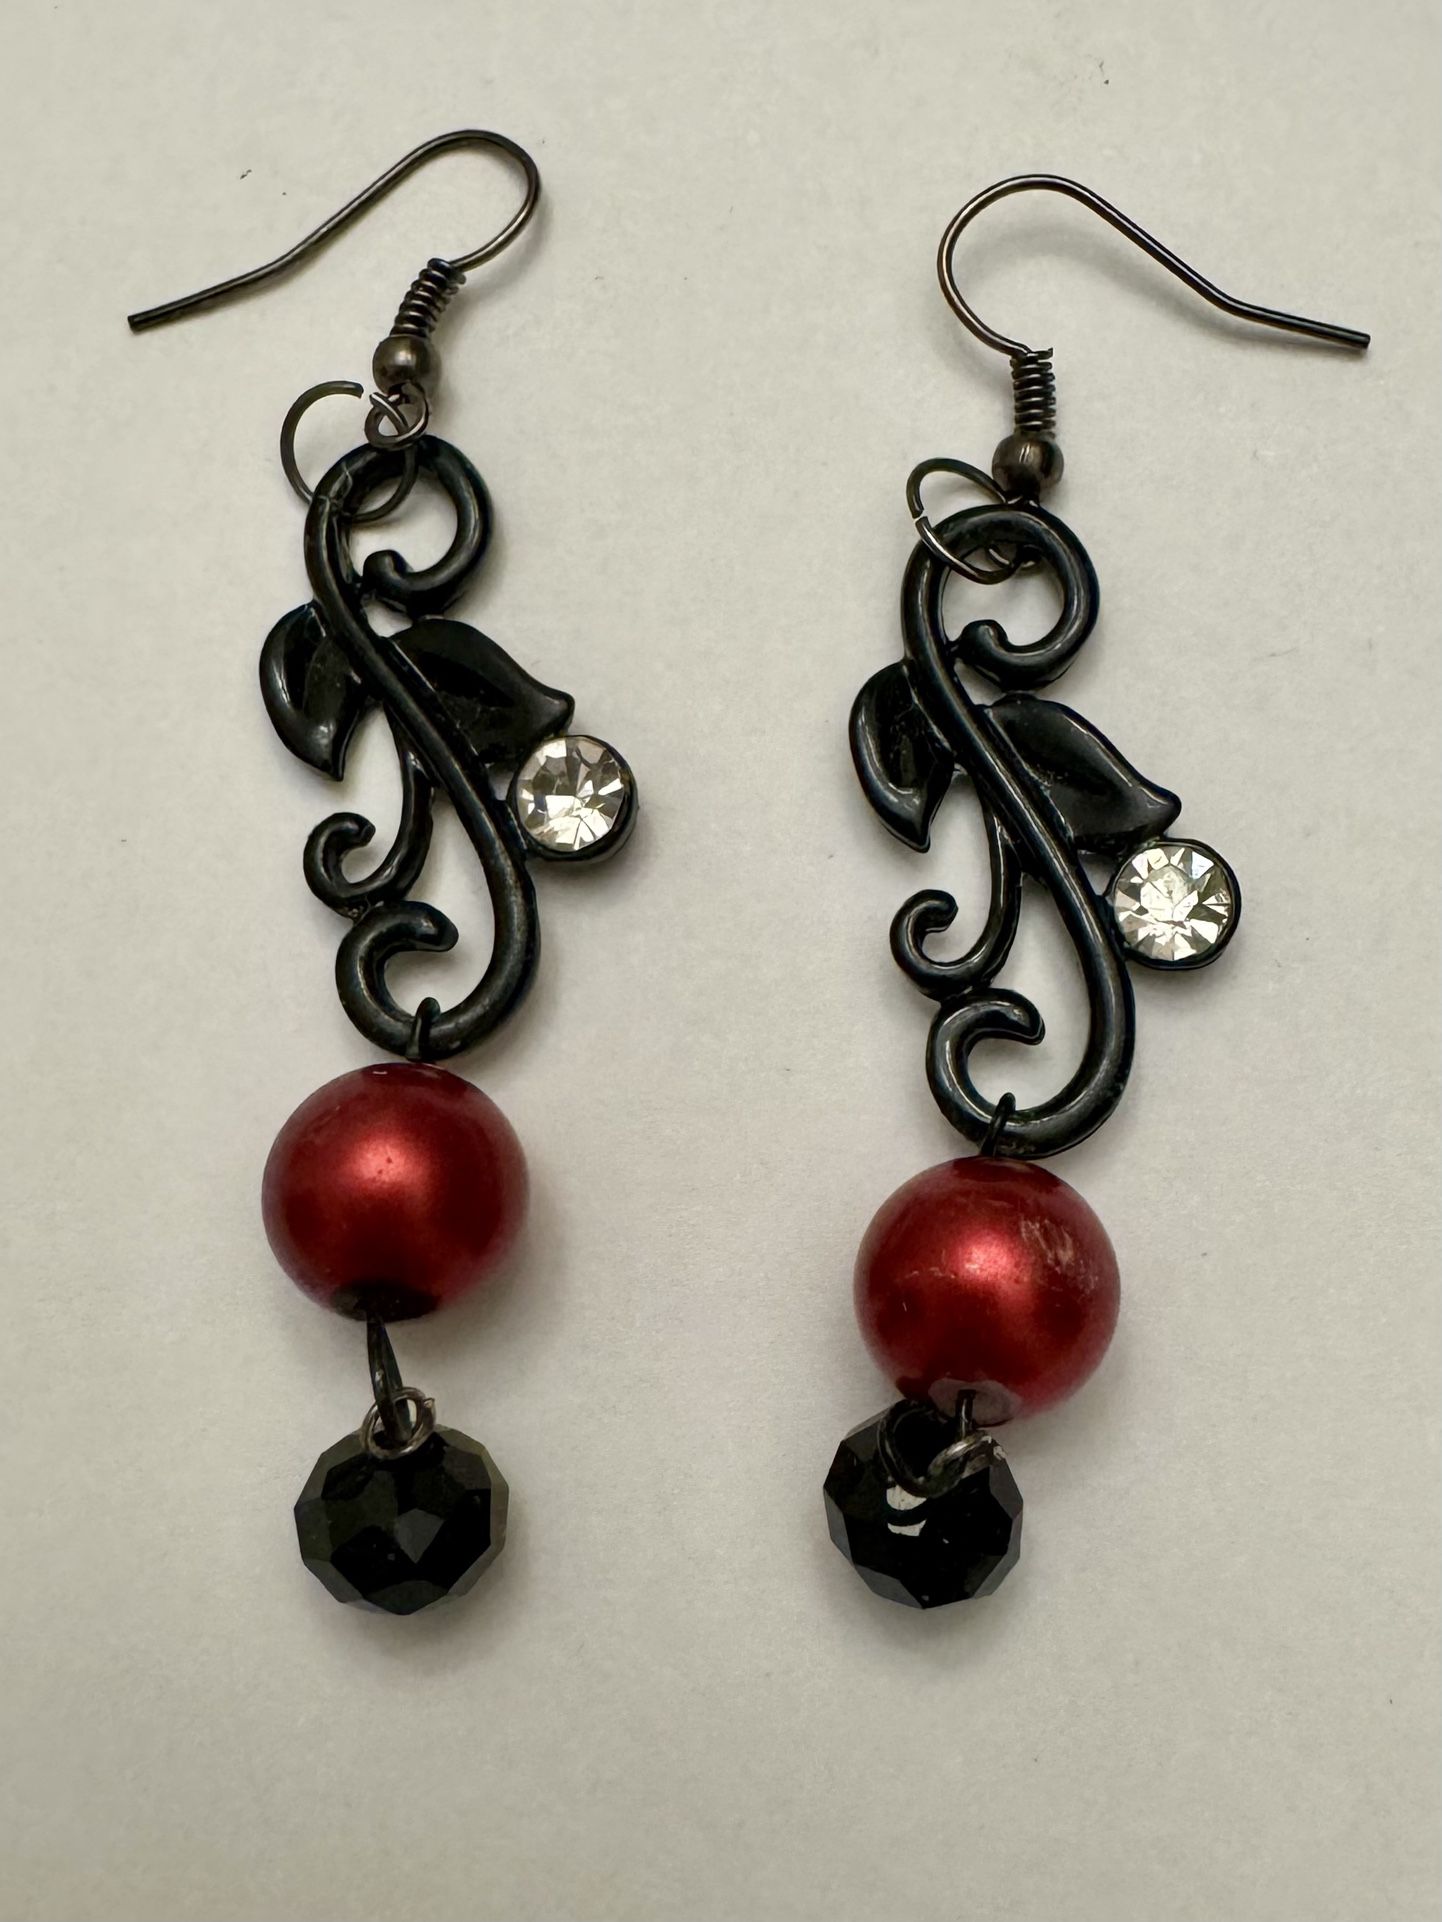 Vintage Fashion Earrings Red Satin Glass Pearl Pendant Drop Black Metal w Glass Stone. 2” drop.  